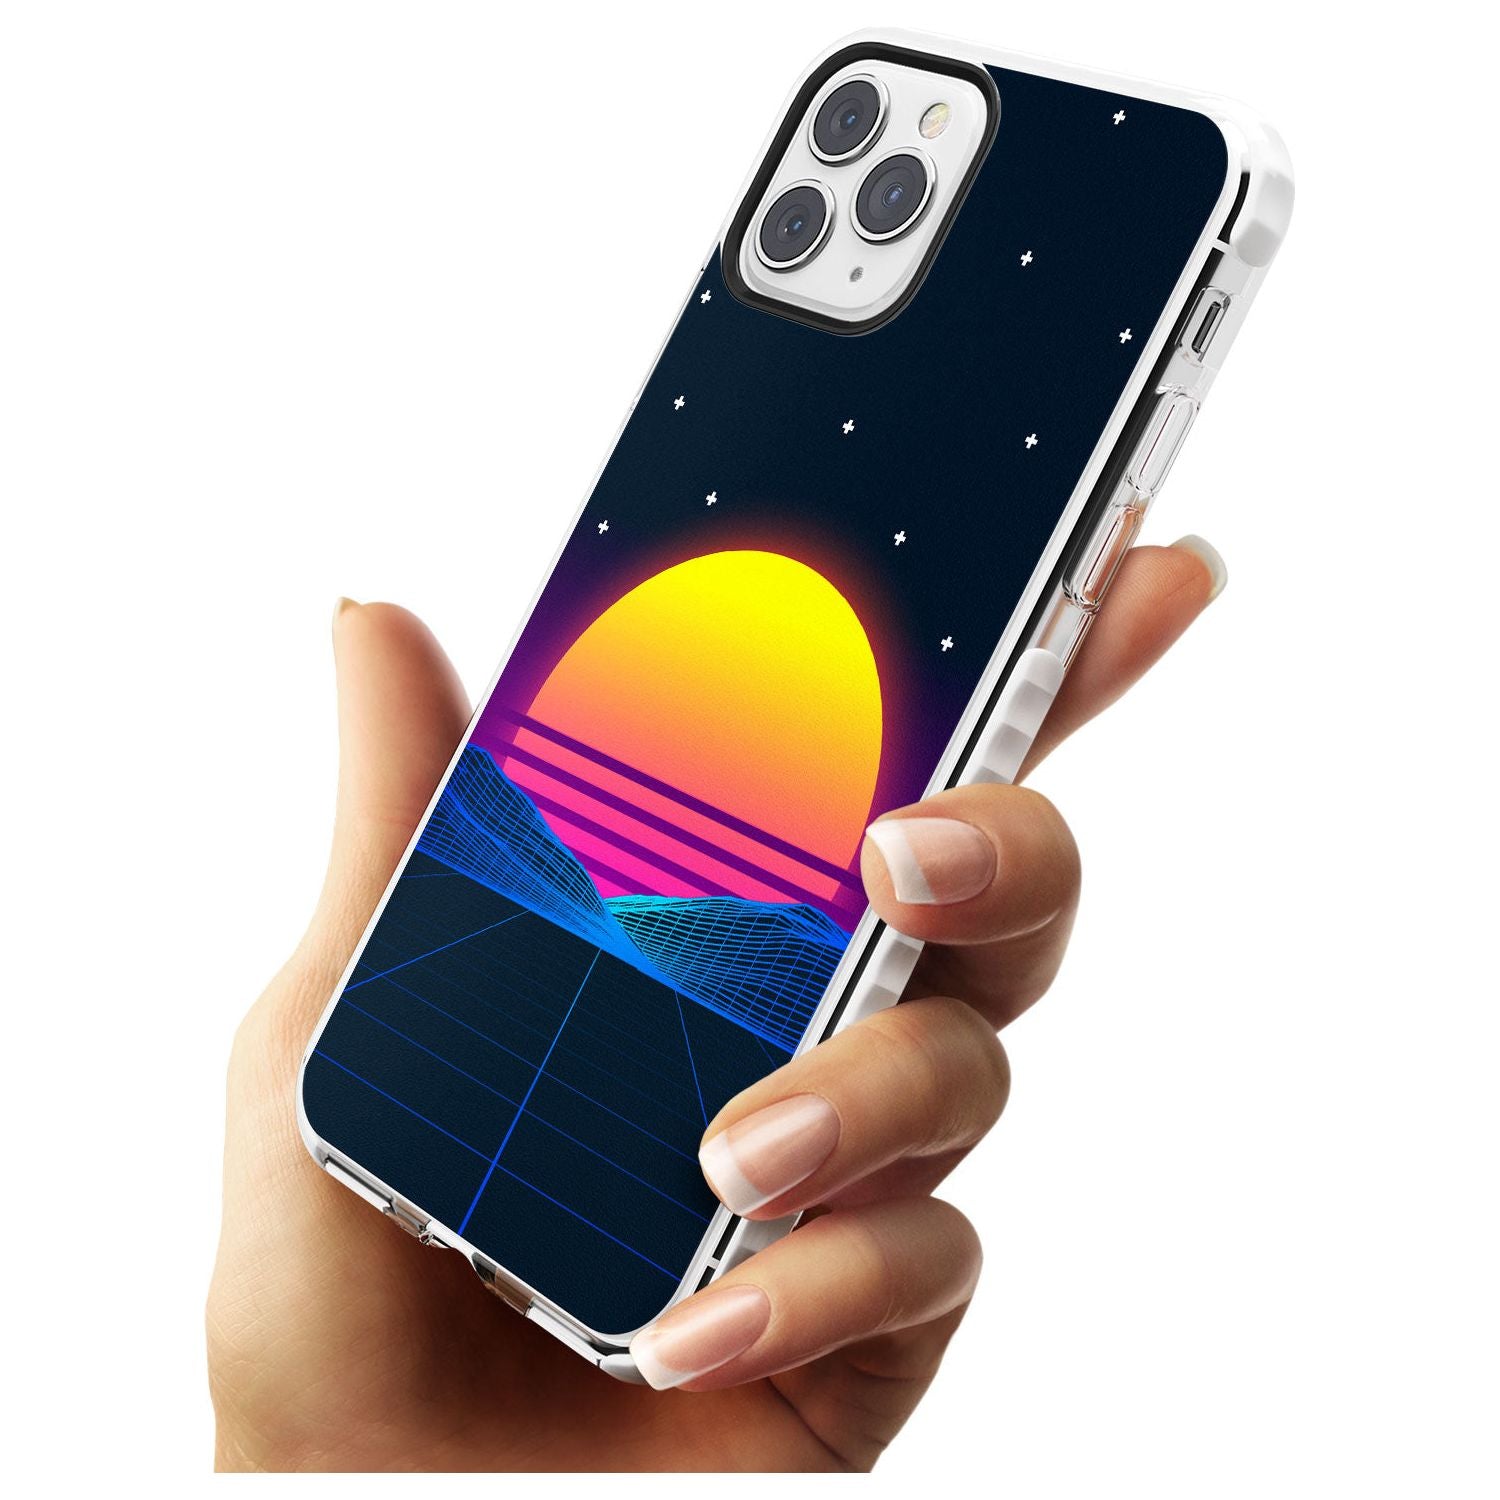 Retro Sunset Vaporwave Impact Phone Case for iPhone 11 Pro Max